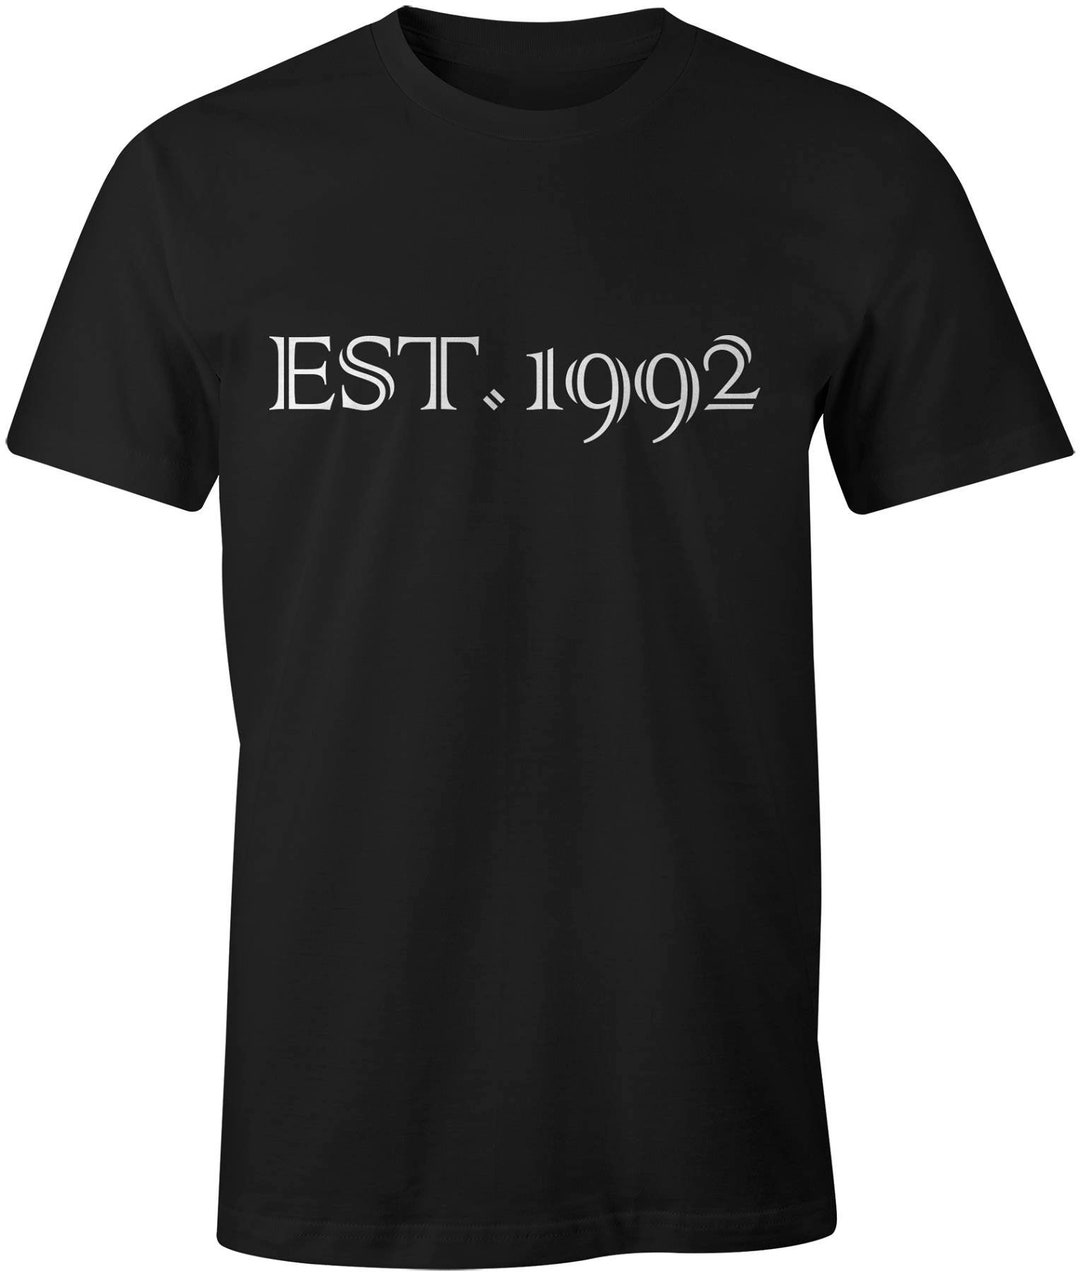 EST 1992 Shirt Established 1992 T-shirt Est. 1992 30 Years - Etsy